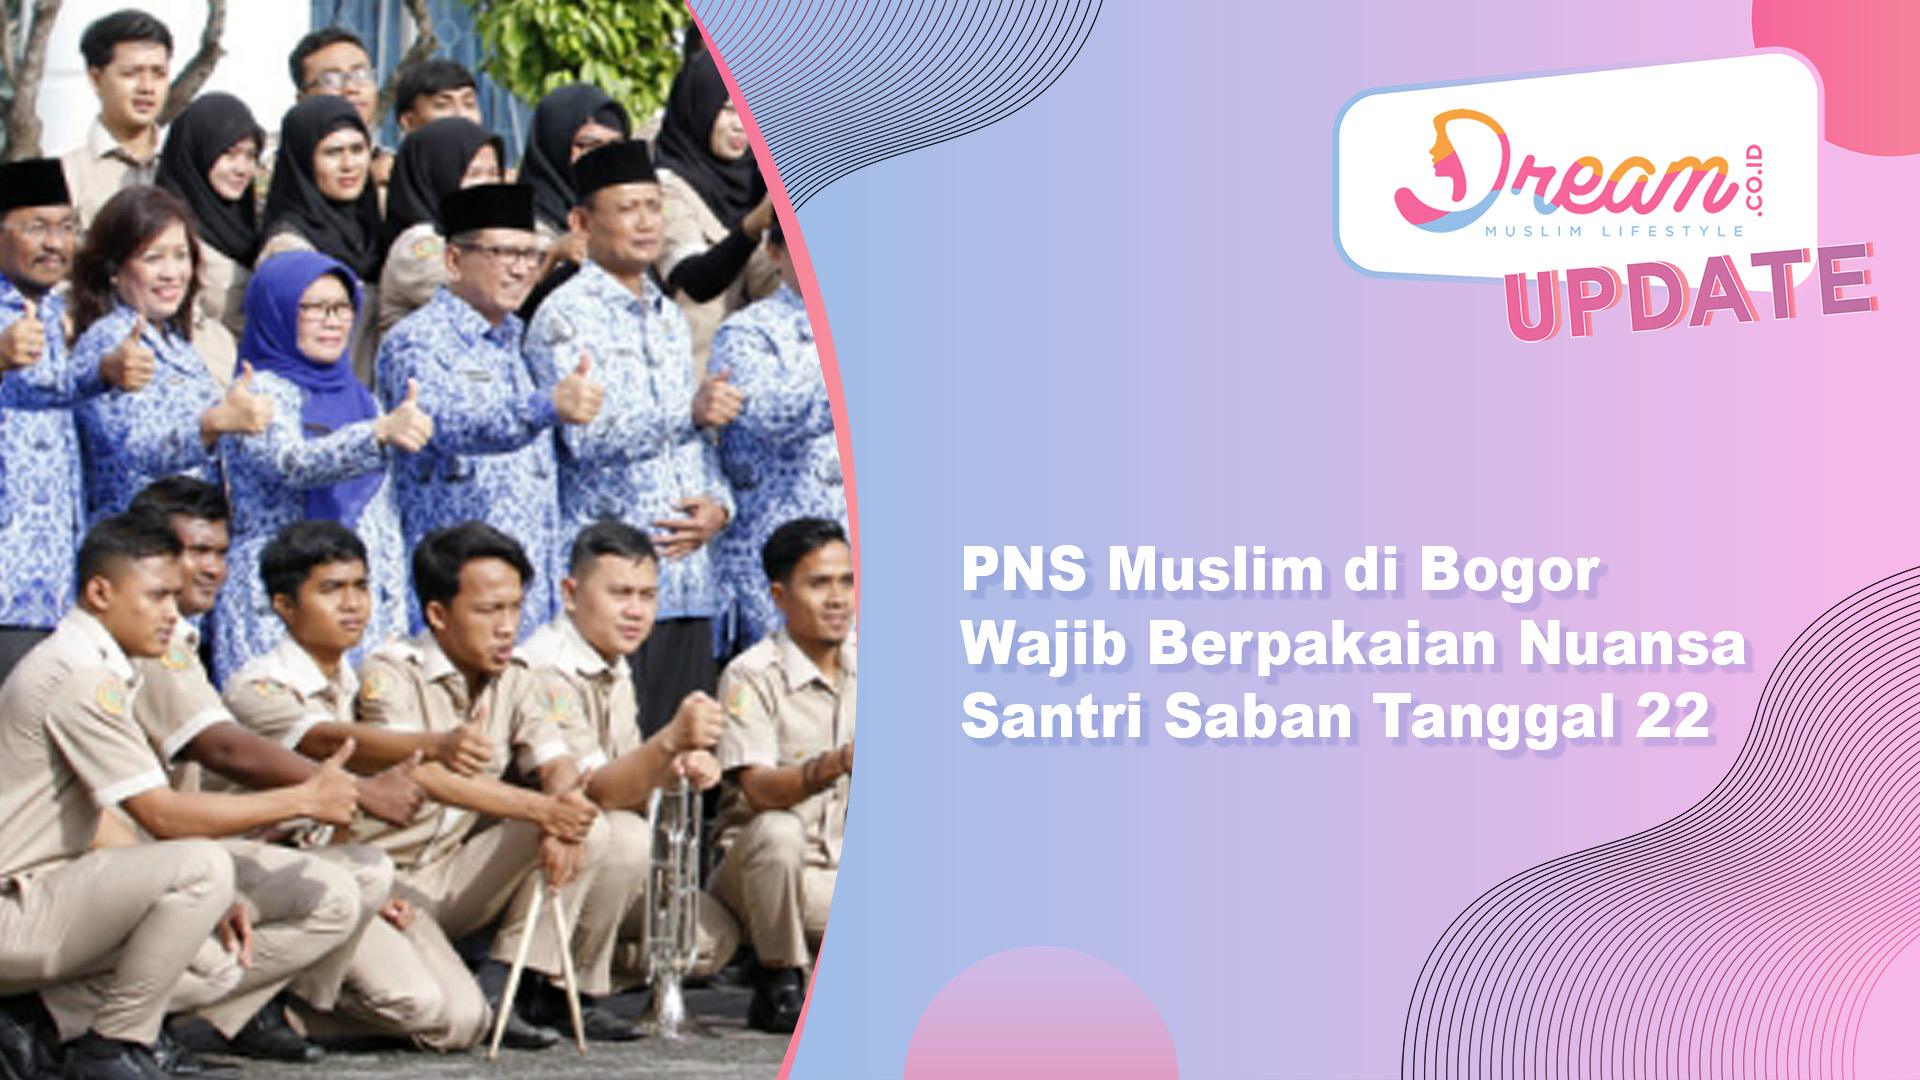 PNS Muslim di Bogor Wajib Pakaian ala Santri Saban Tanggal 22